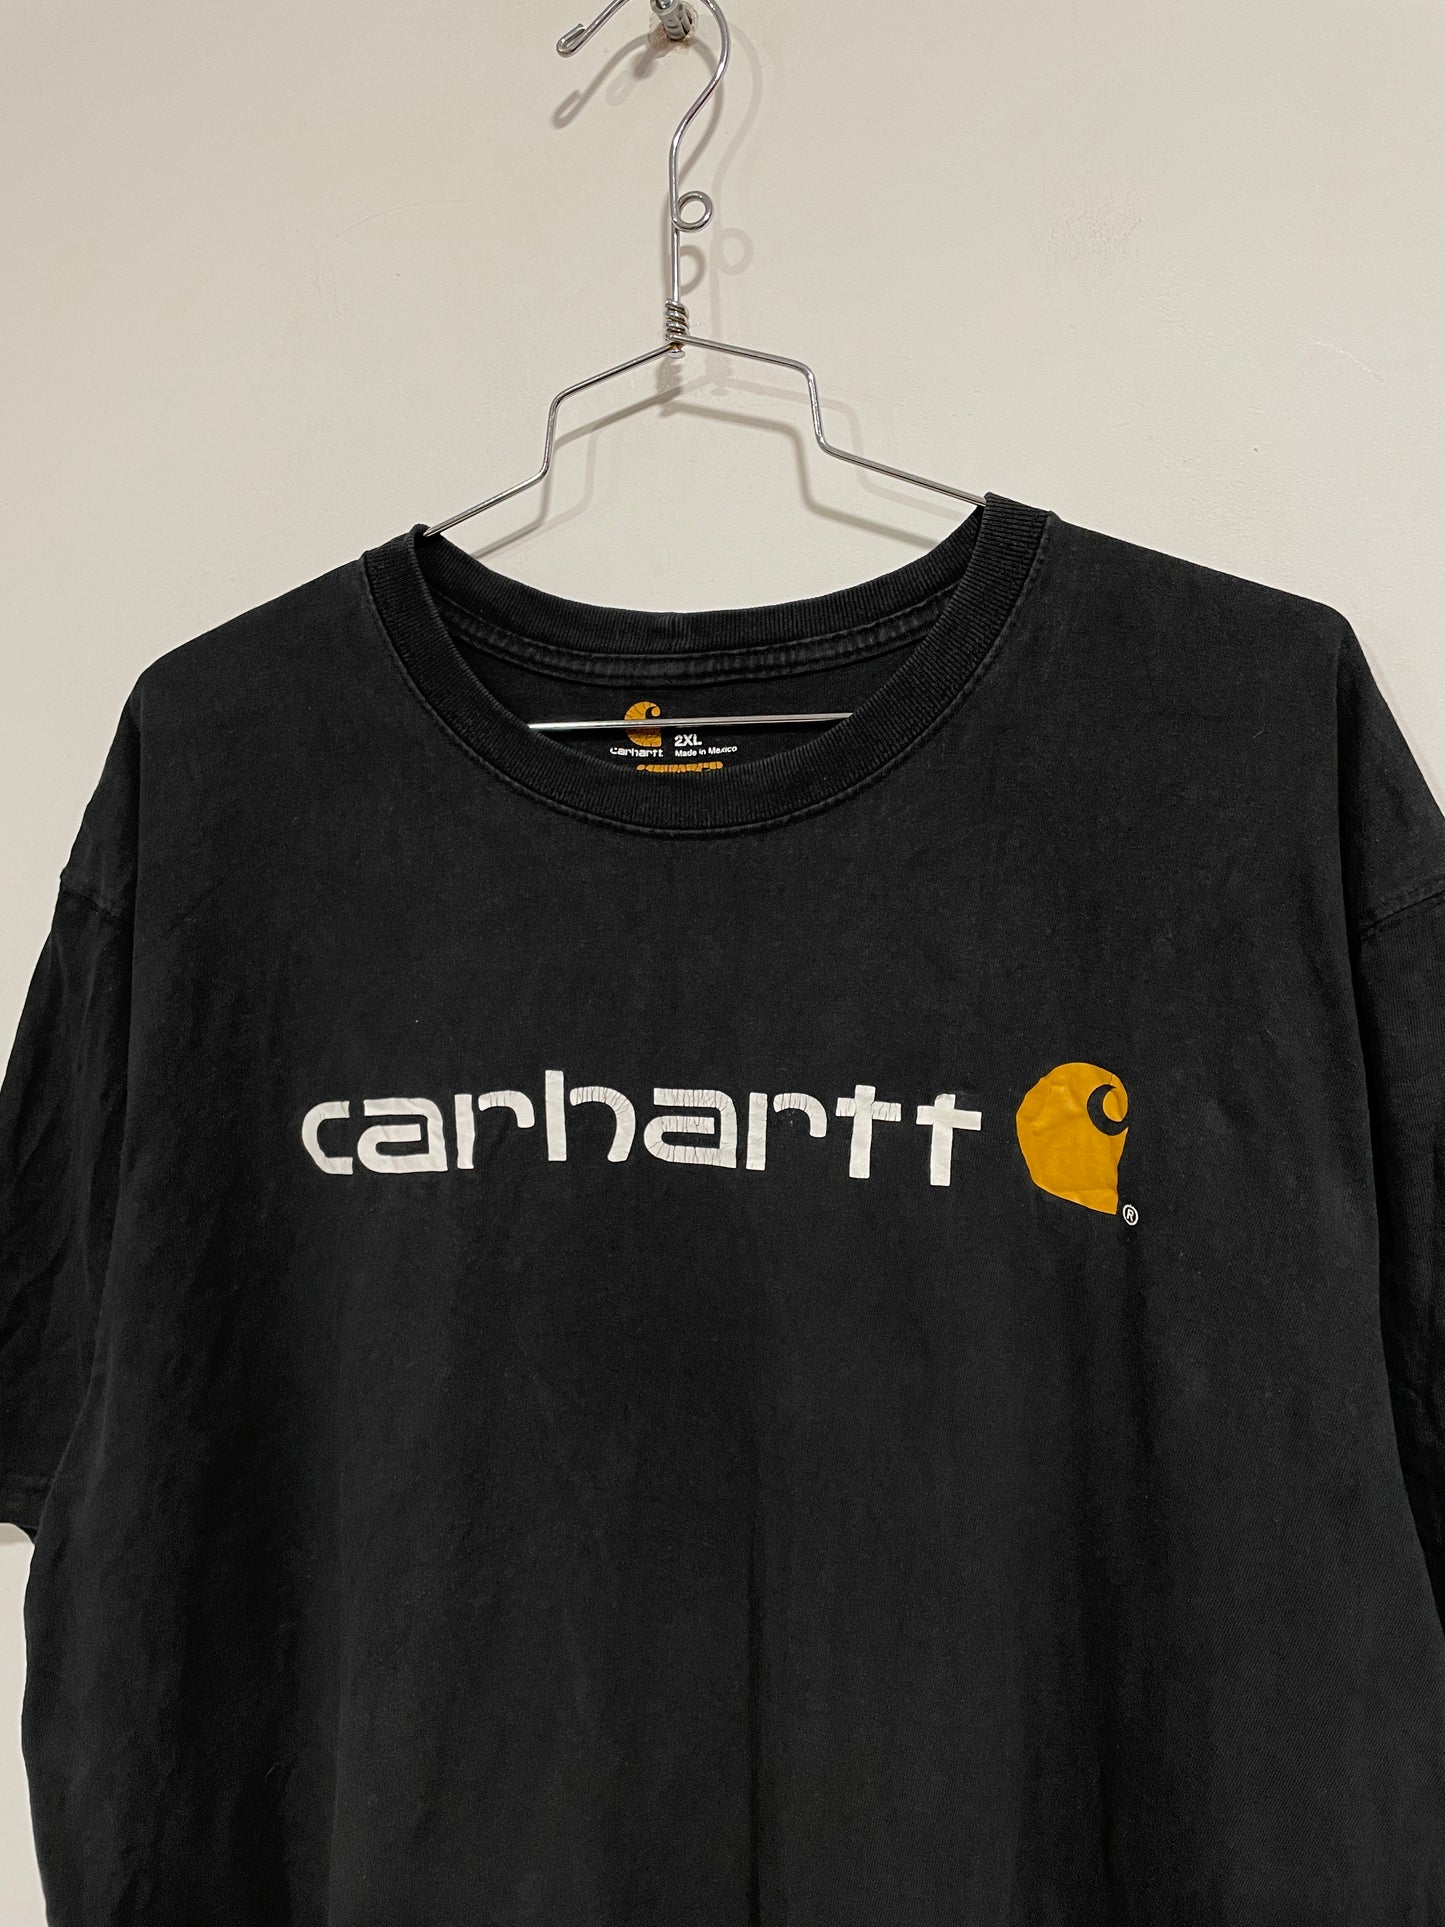 T shirt Carhartt Workear (MR049)